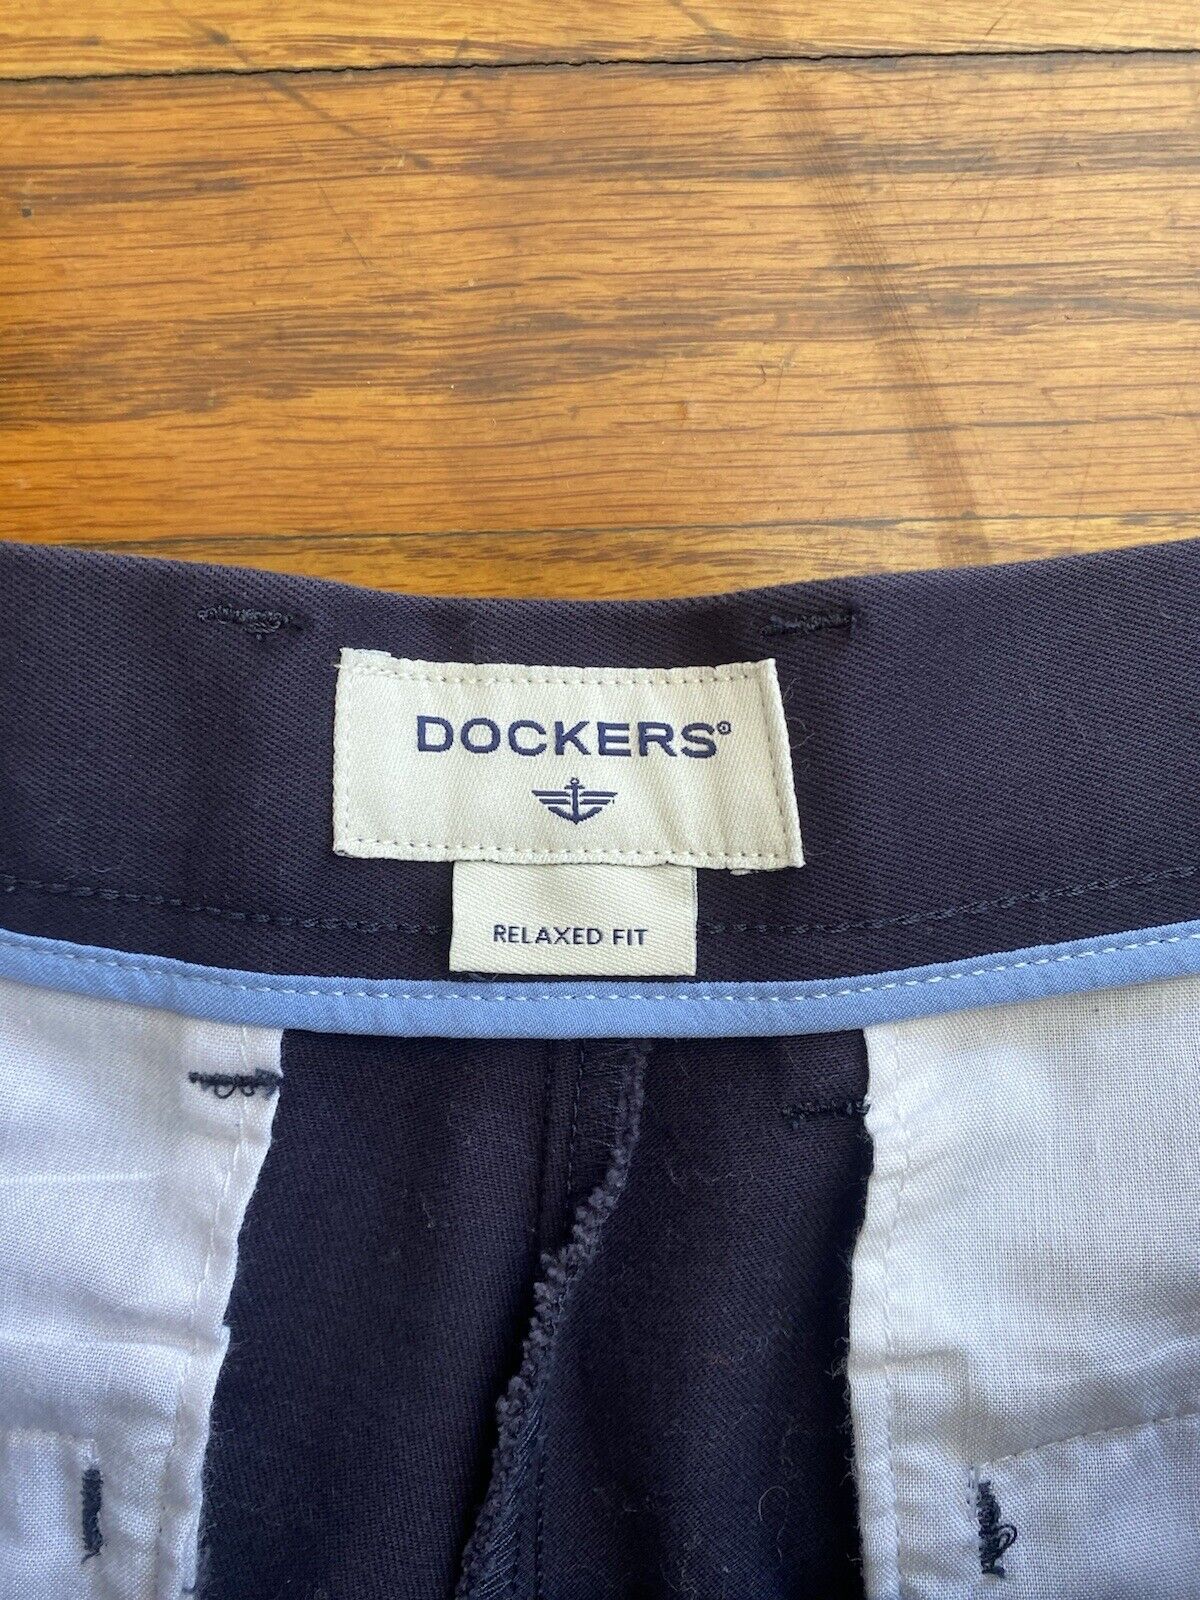 Blue Straight Leg Pants - Dockers - 31 x 32